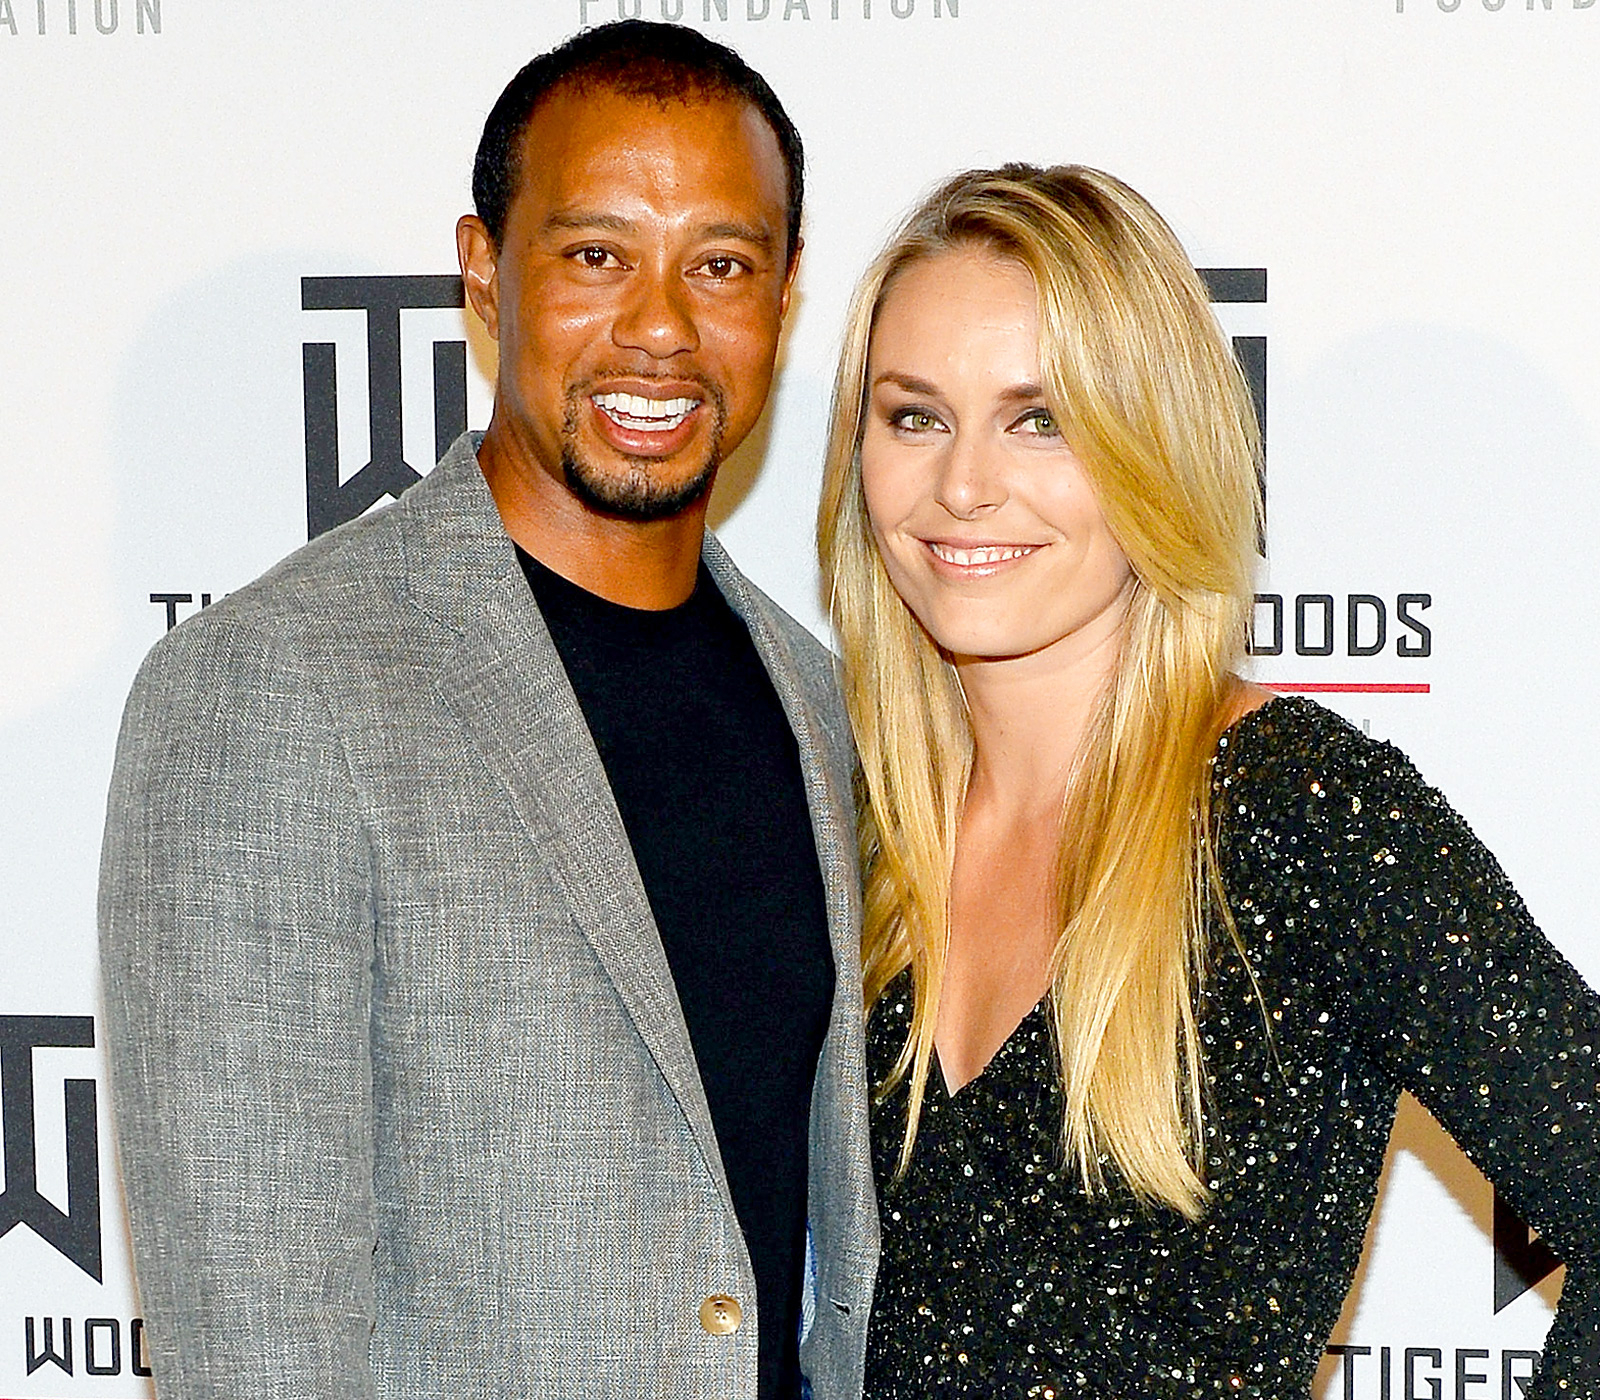 Leaked photos vonn lindsey nude Tiger Woods